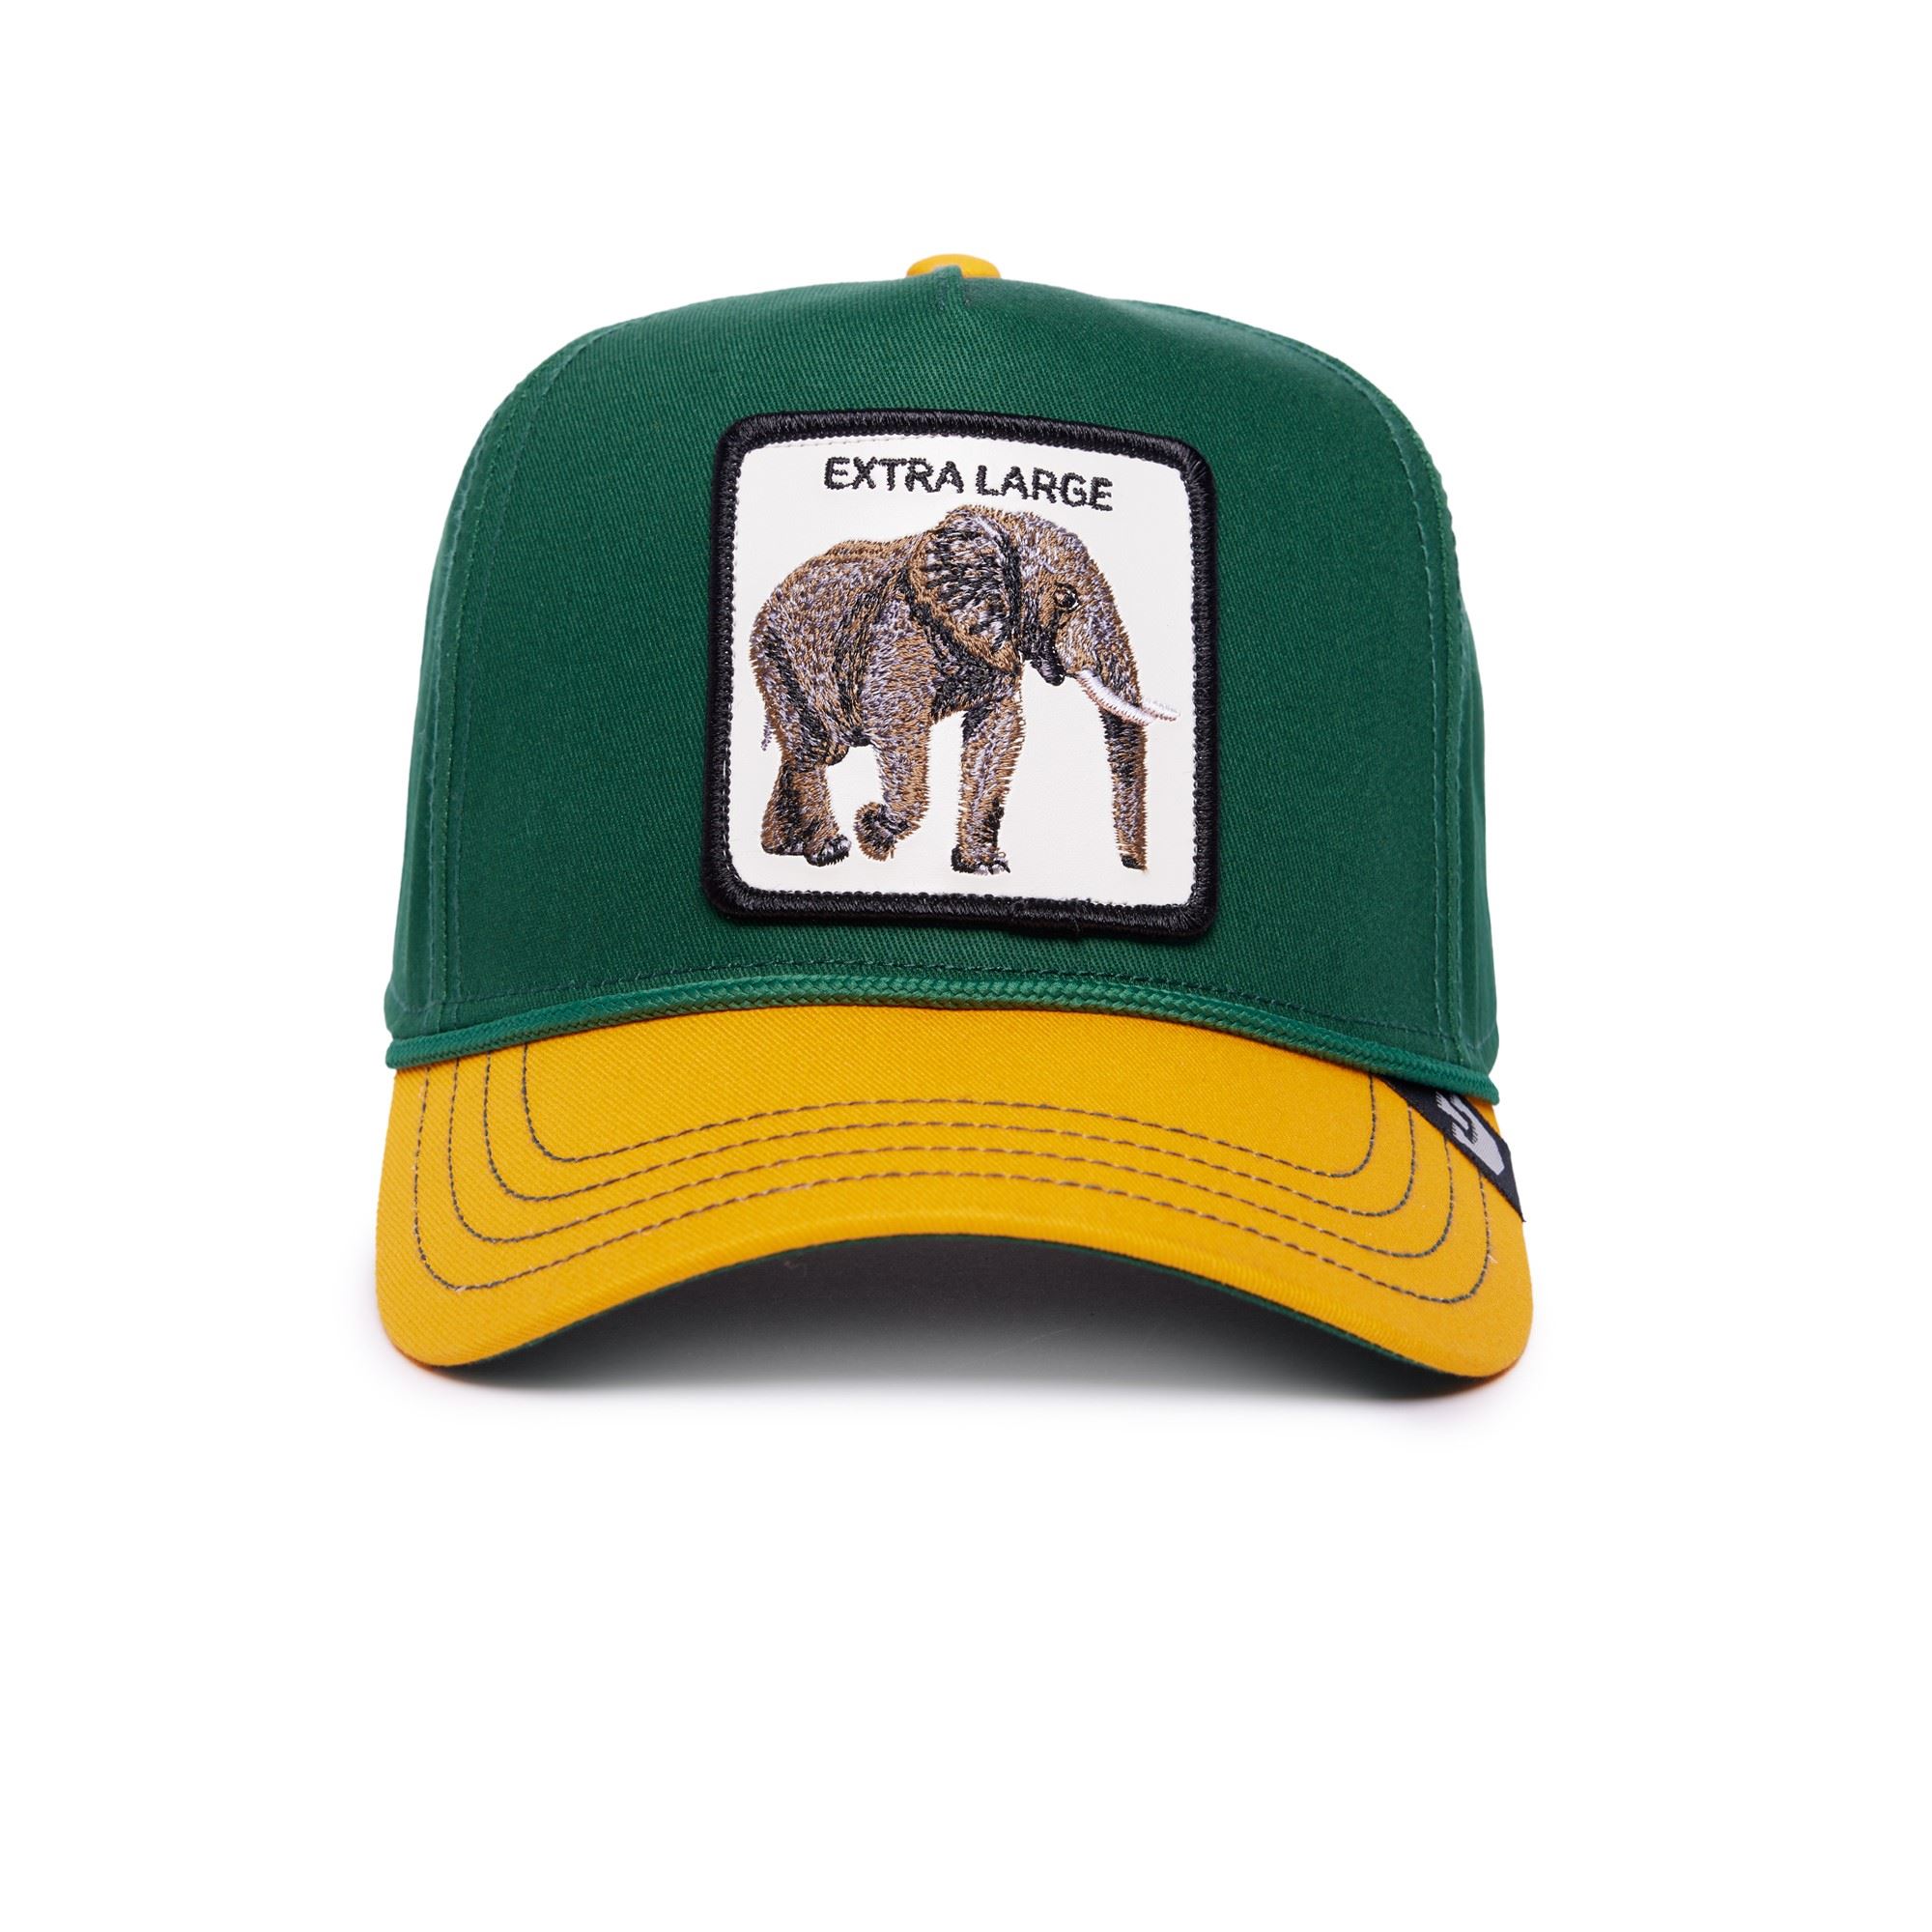 Extra Large Elefant Grün Gelb Verstellbare Snapback Cap Goorin Bros